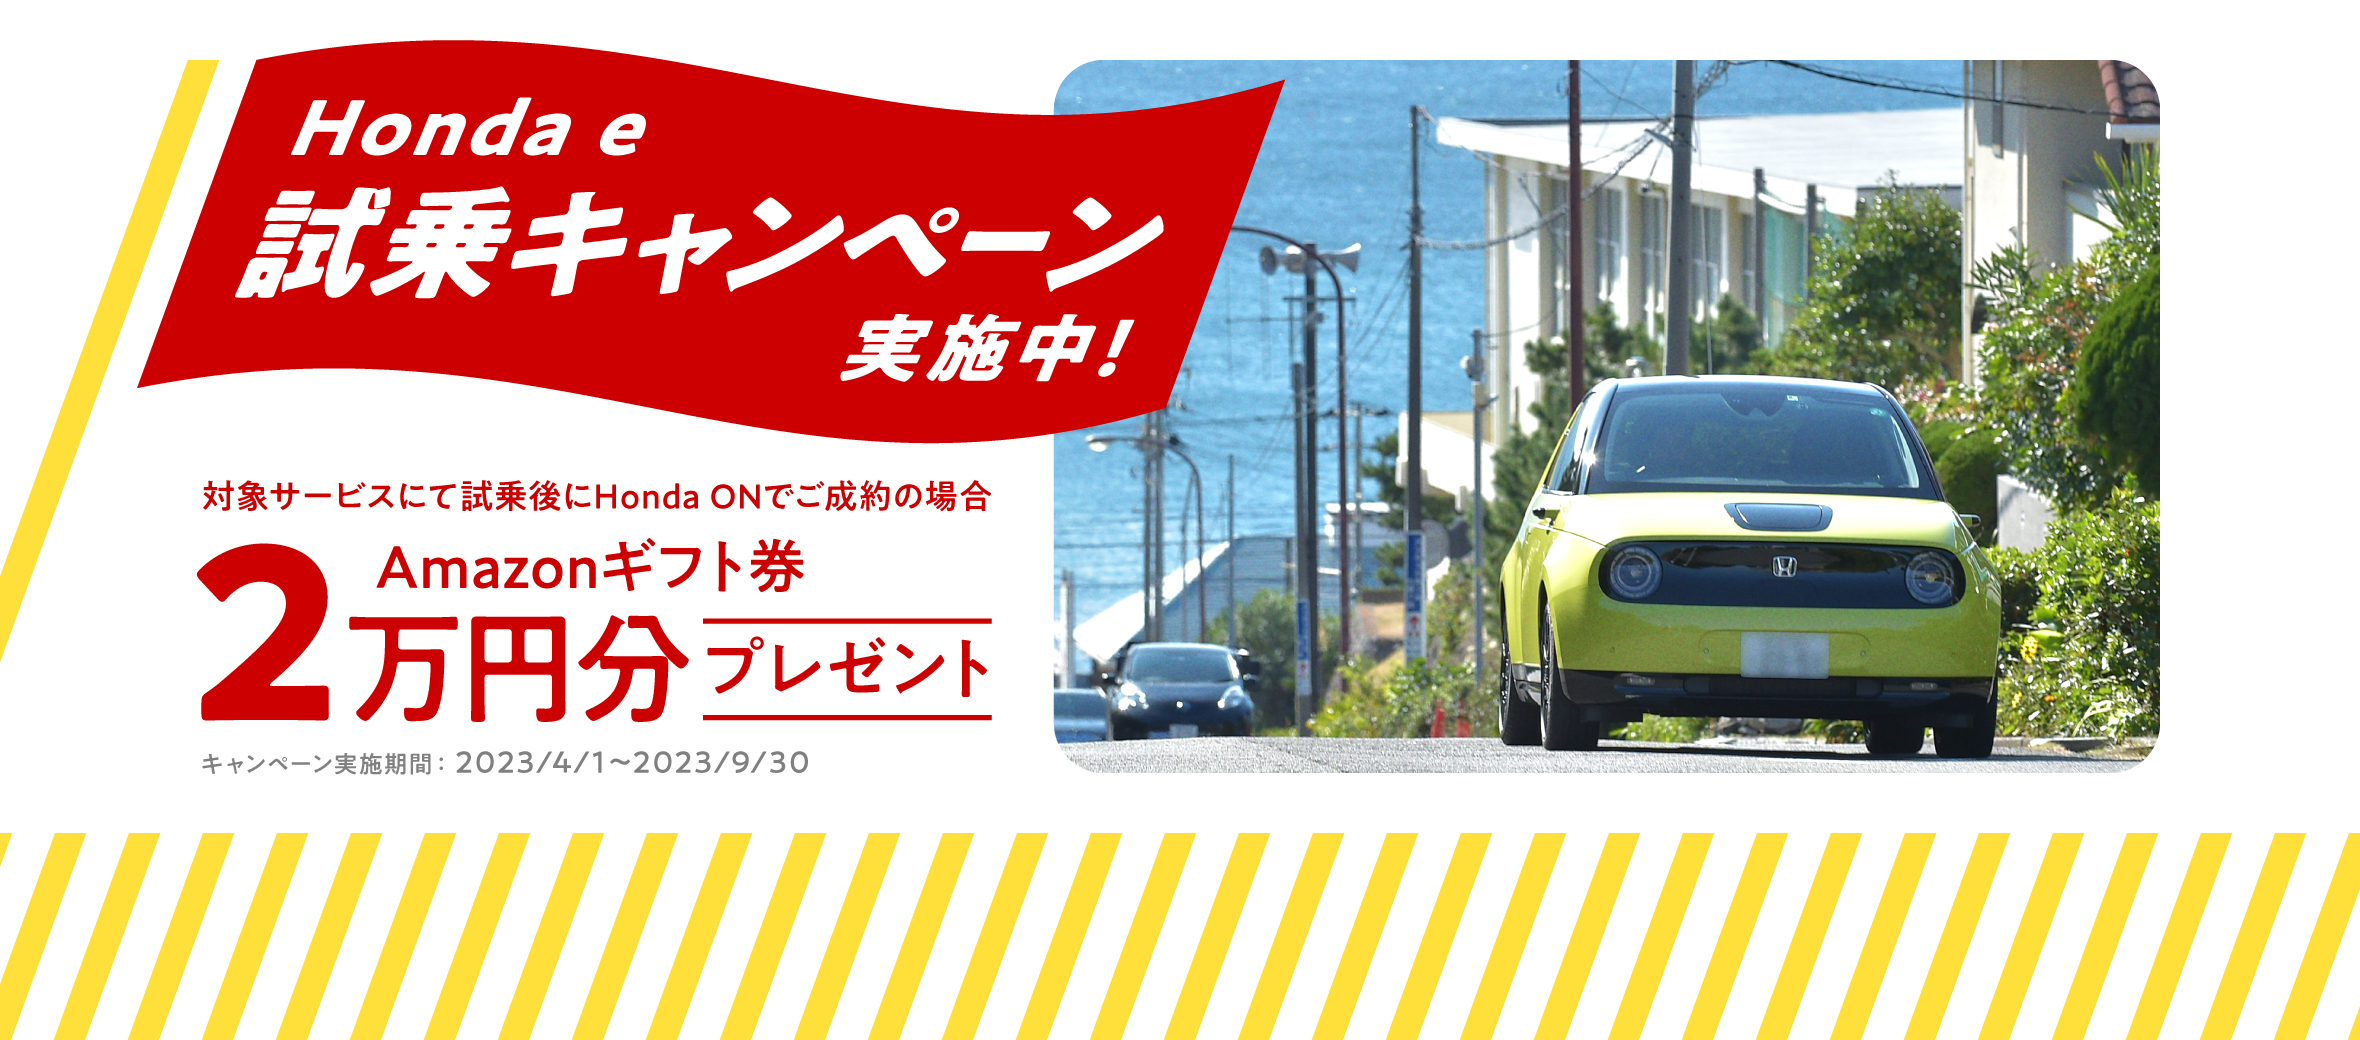 Honda ON ご成約限定キャンペーン Amazonギフト券3万円分プレゼント